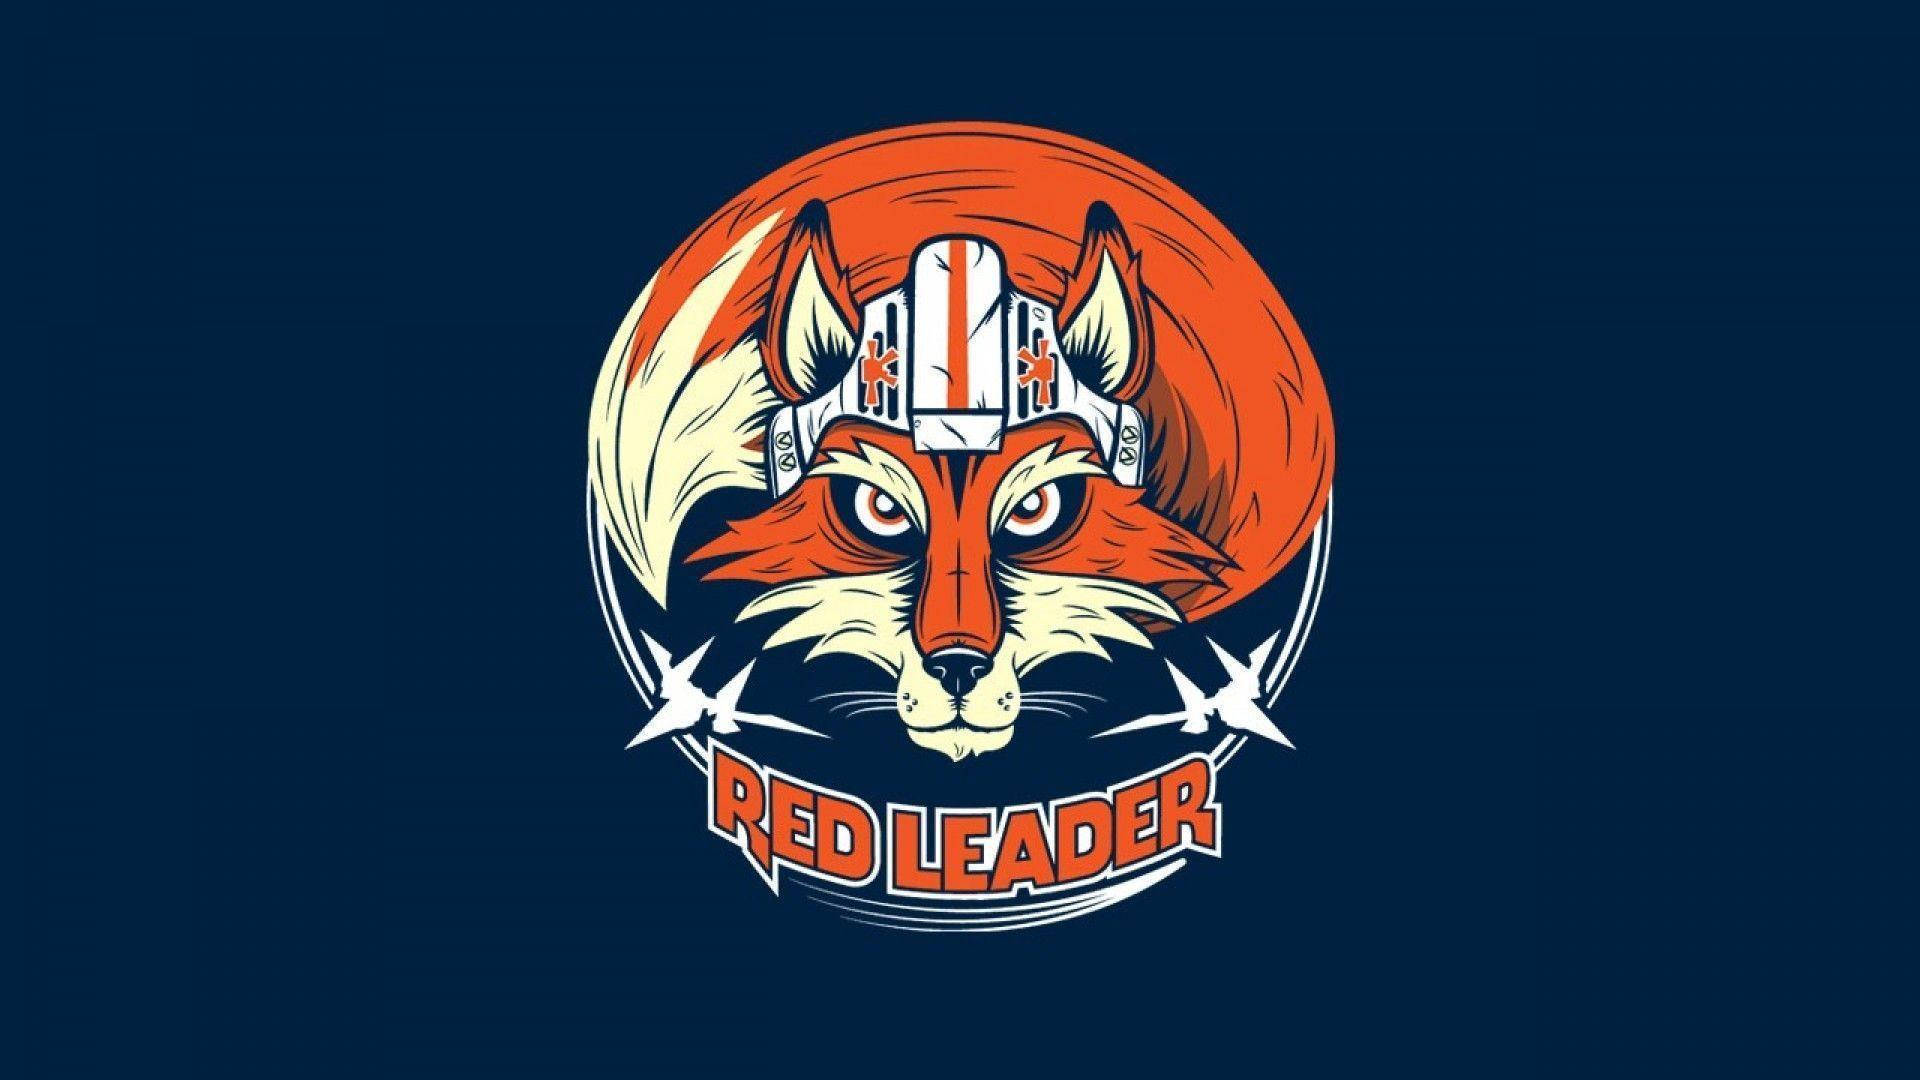 Star Fox Fox Mccloud Red Leader